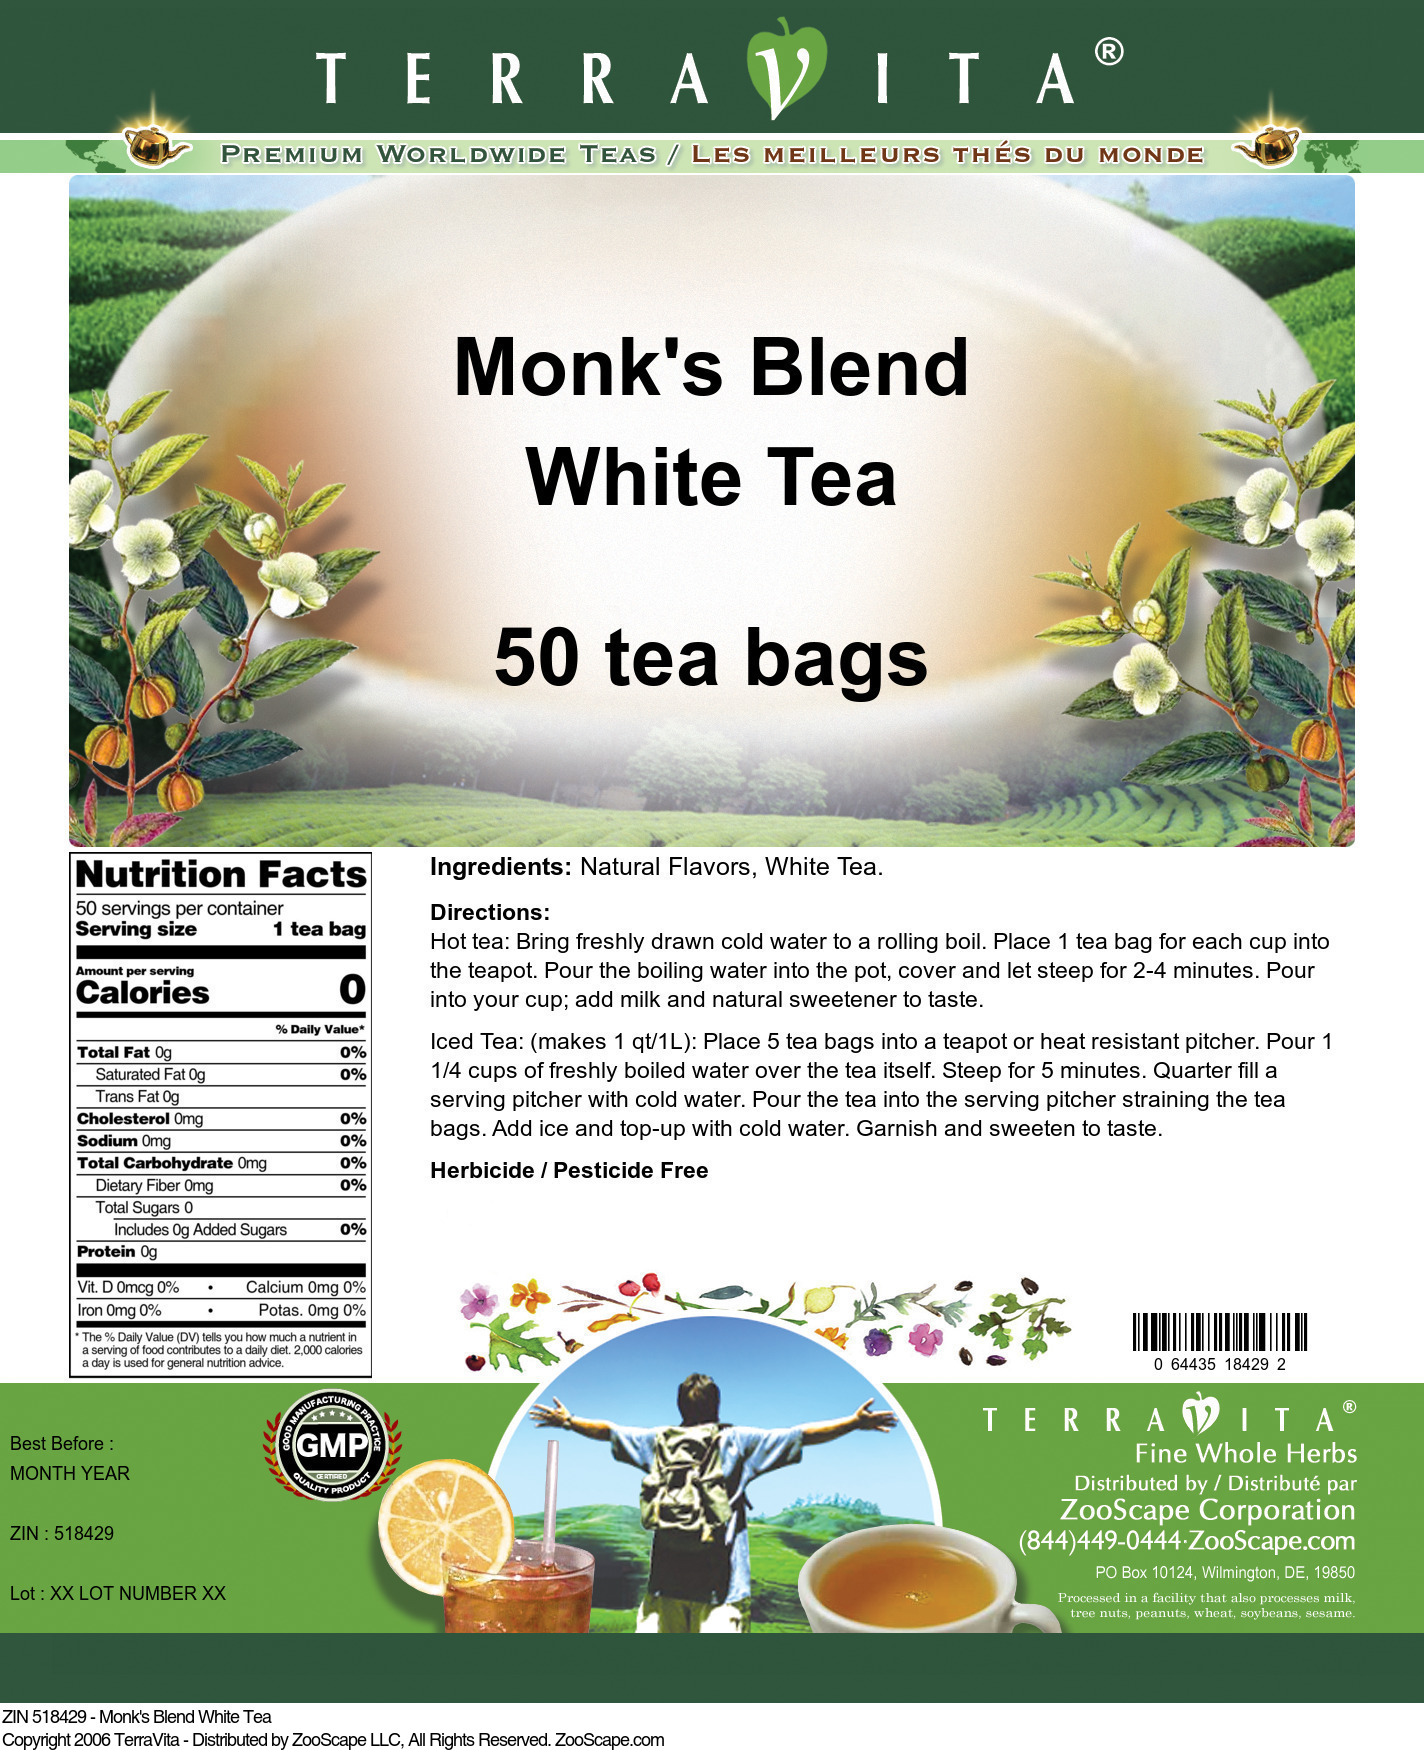 Monk's Blend White Tea - Label